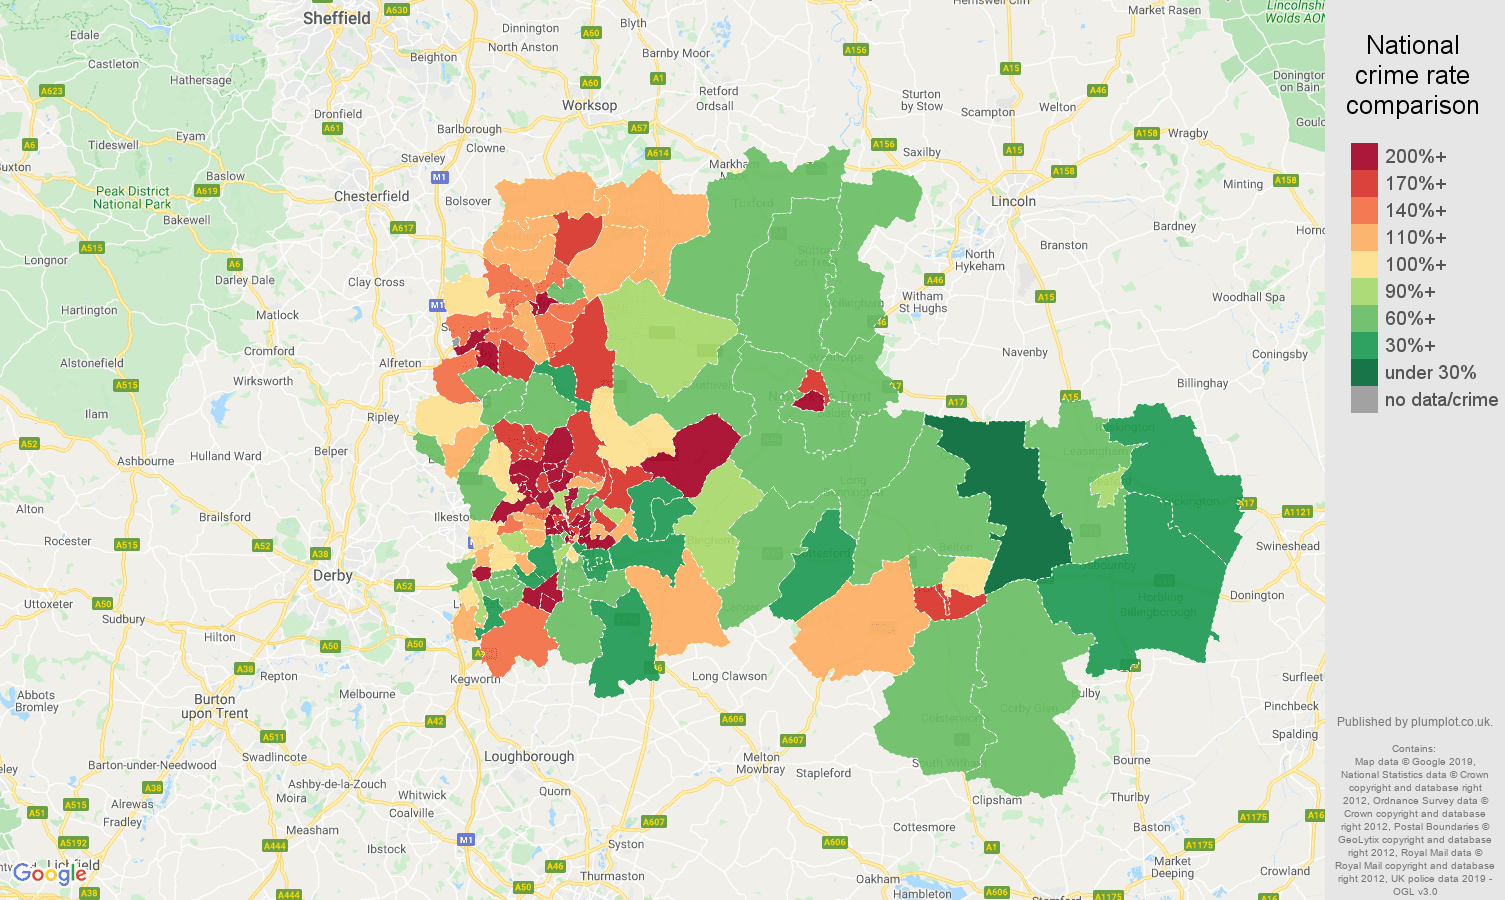 Nottingham other crime rate comparison map